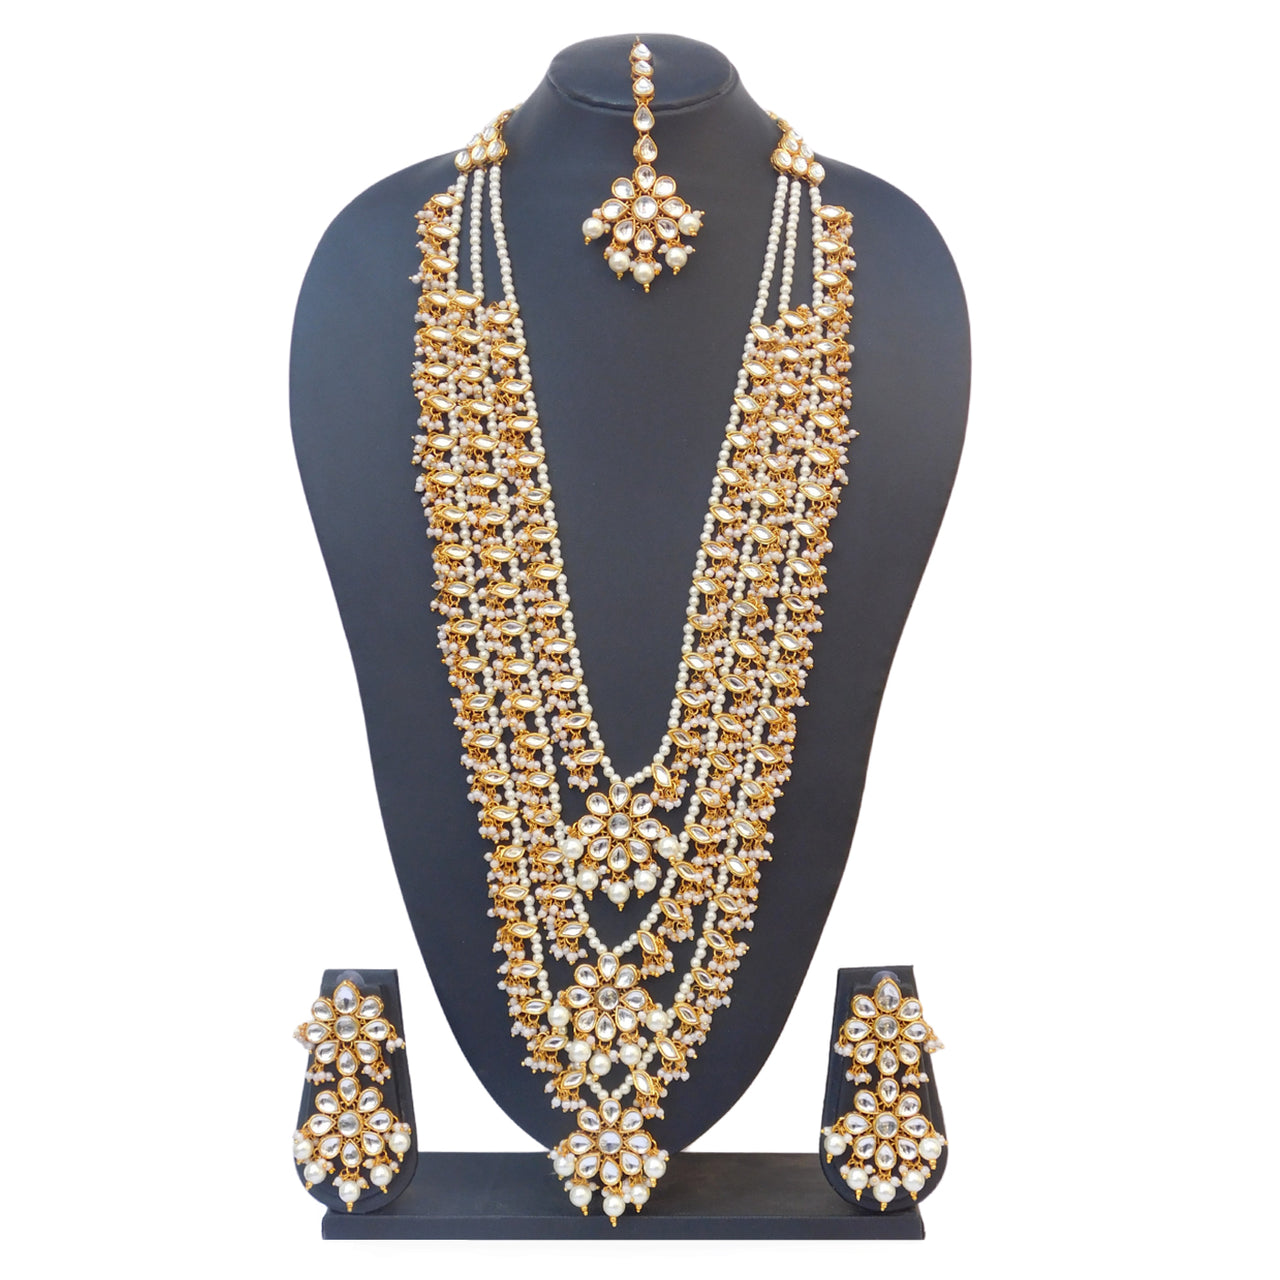 Sujwel Gold Plated Kundan 3 Layered Long Jewellery Set for Women (08-0108) - Sujwel